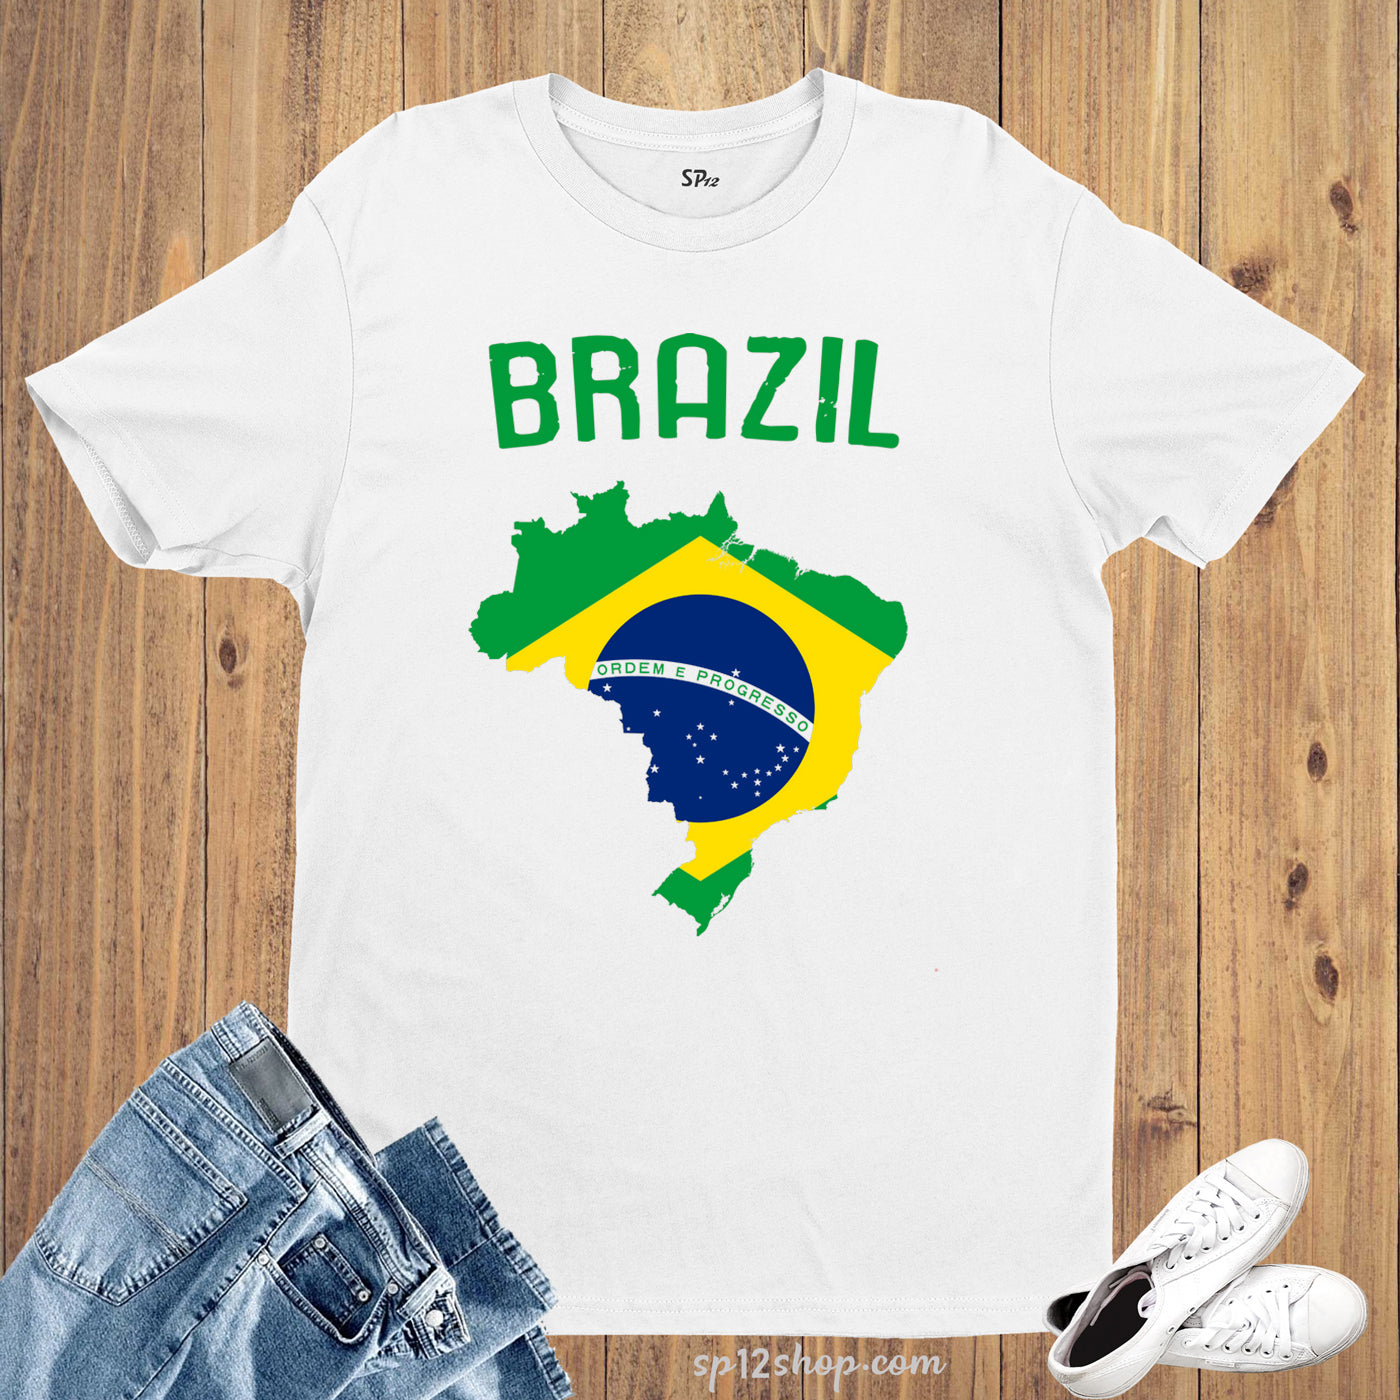 Brazil Flag T Shirt Olympics FIFA World Cup Country Flag Tee Shirt